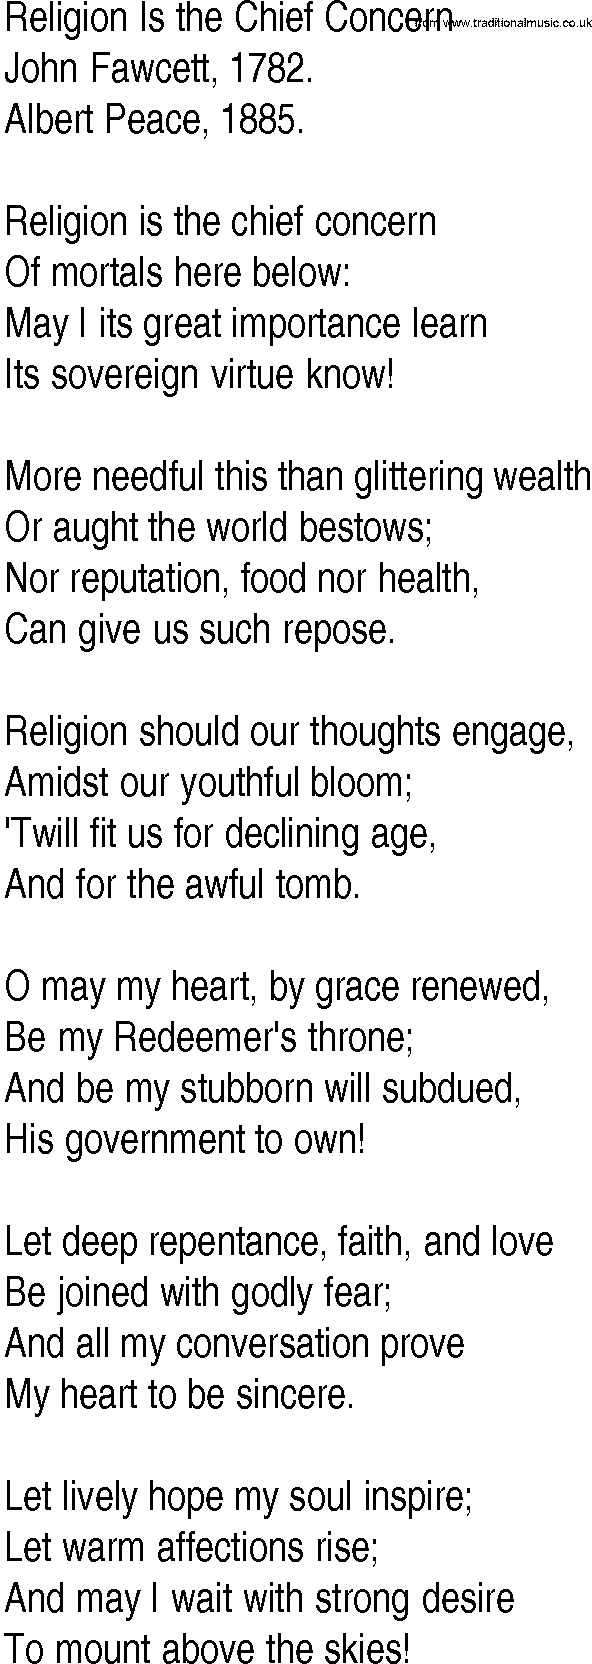 Hymn and Gospel Song: Religion Is the Chief Concern by John Fawcett lyrics